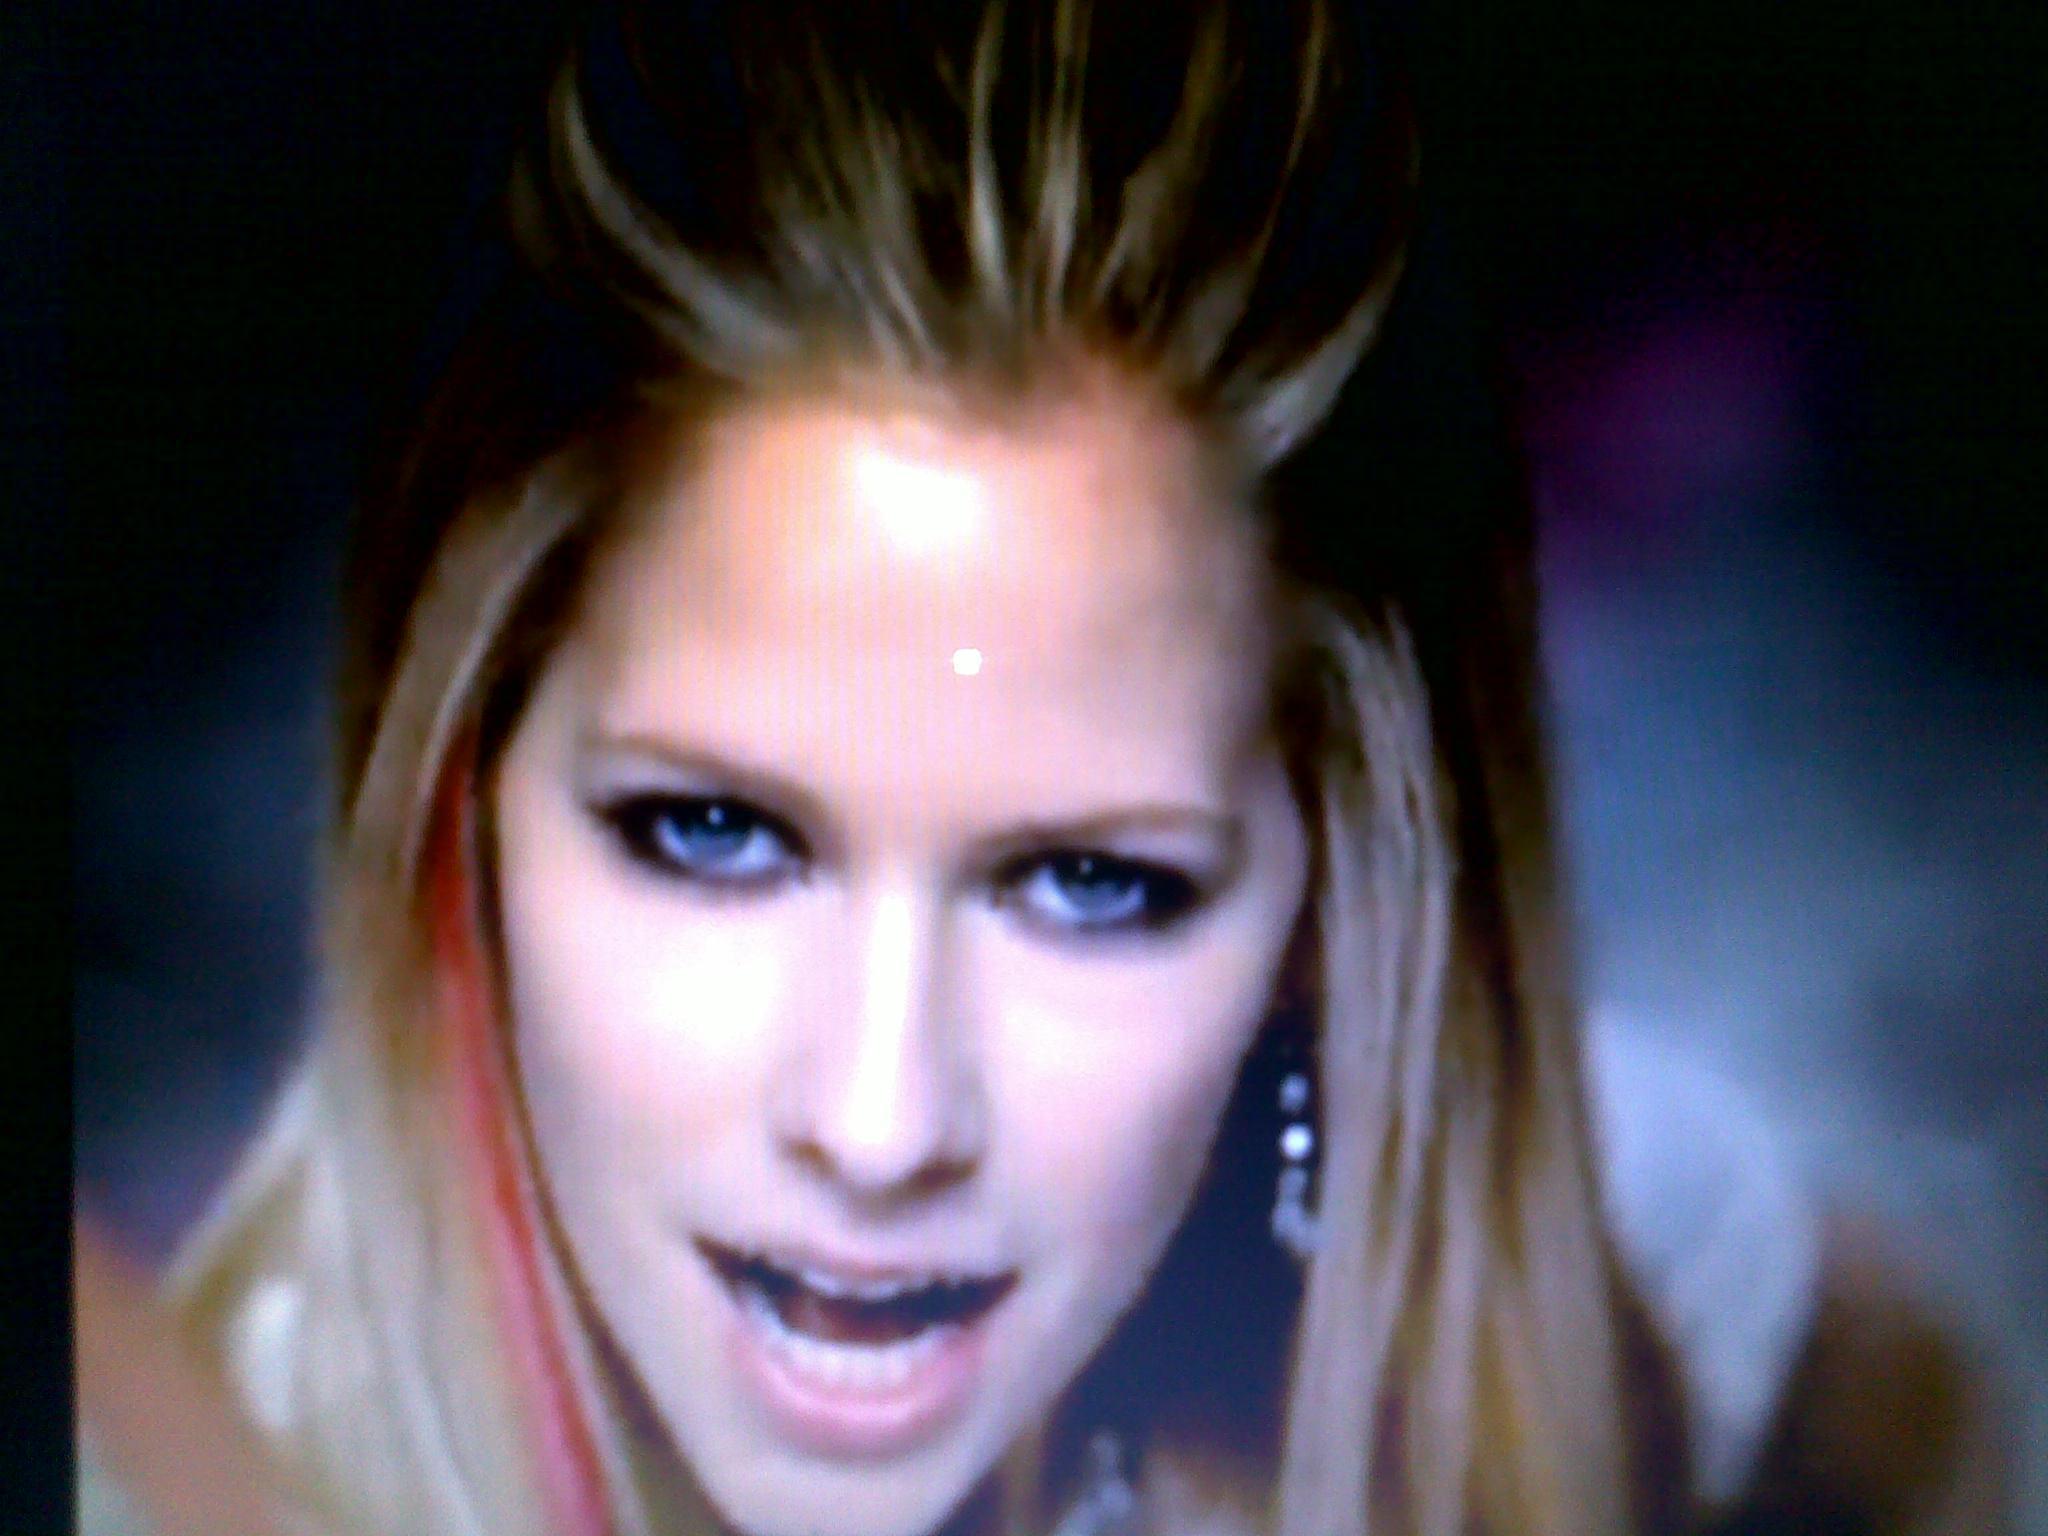 Music video - Girlfriend - Avril Lavigne Image (16184192) - Fanpop